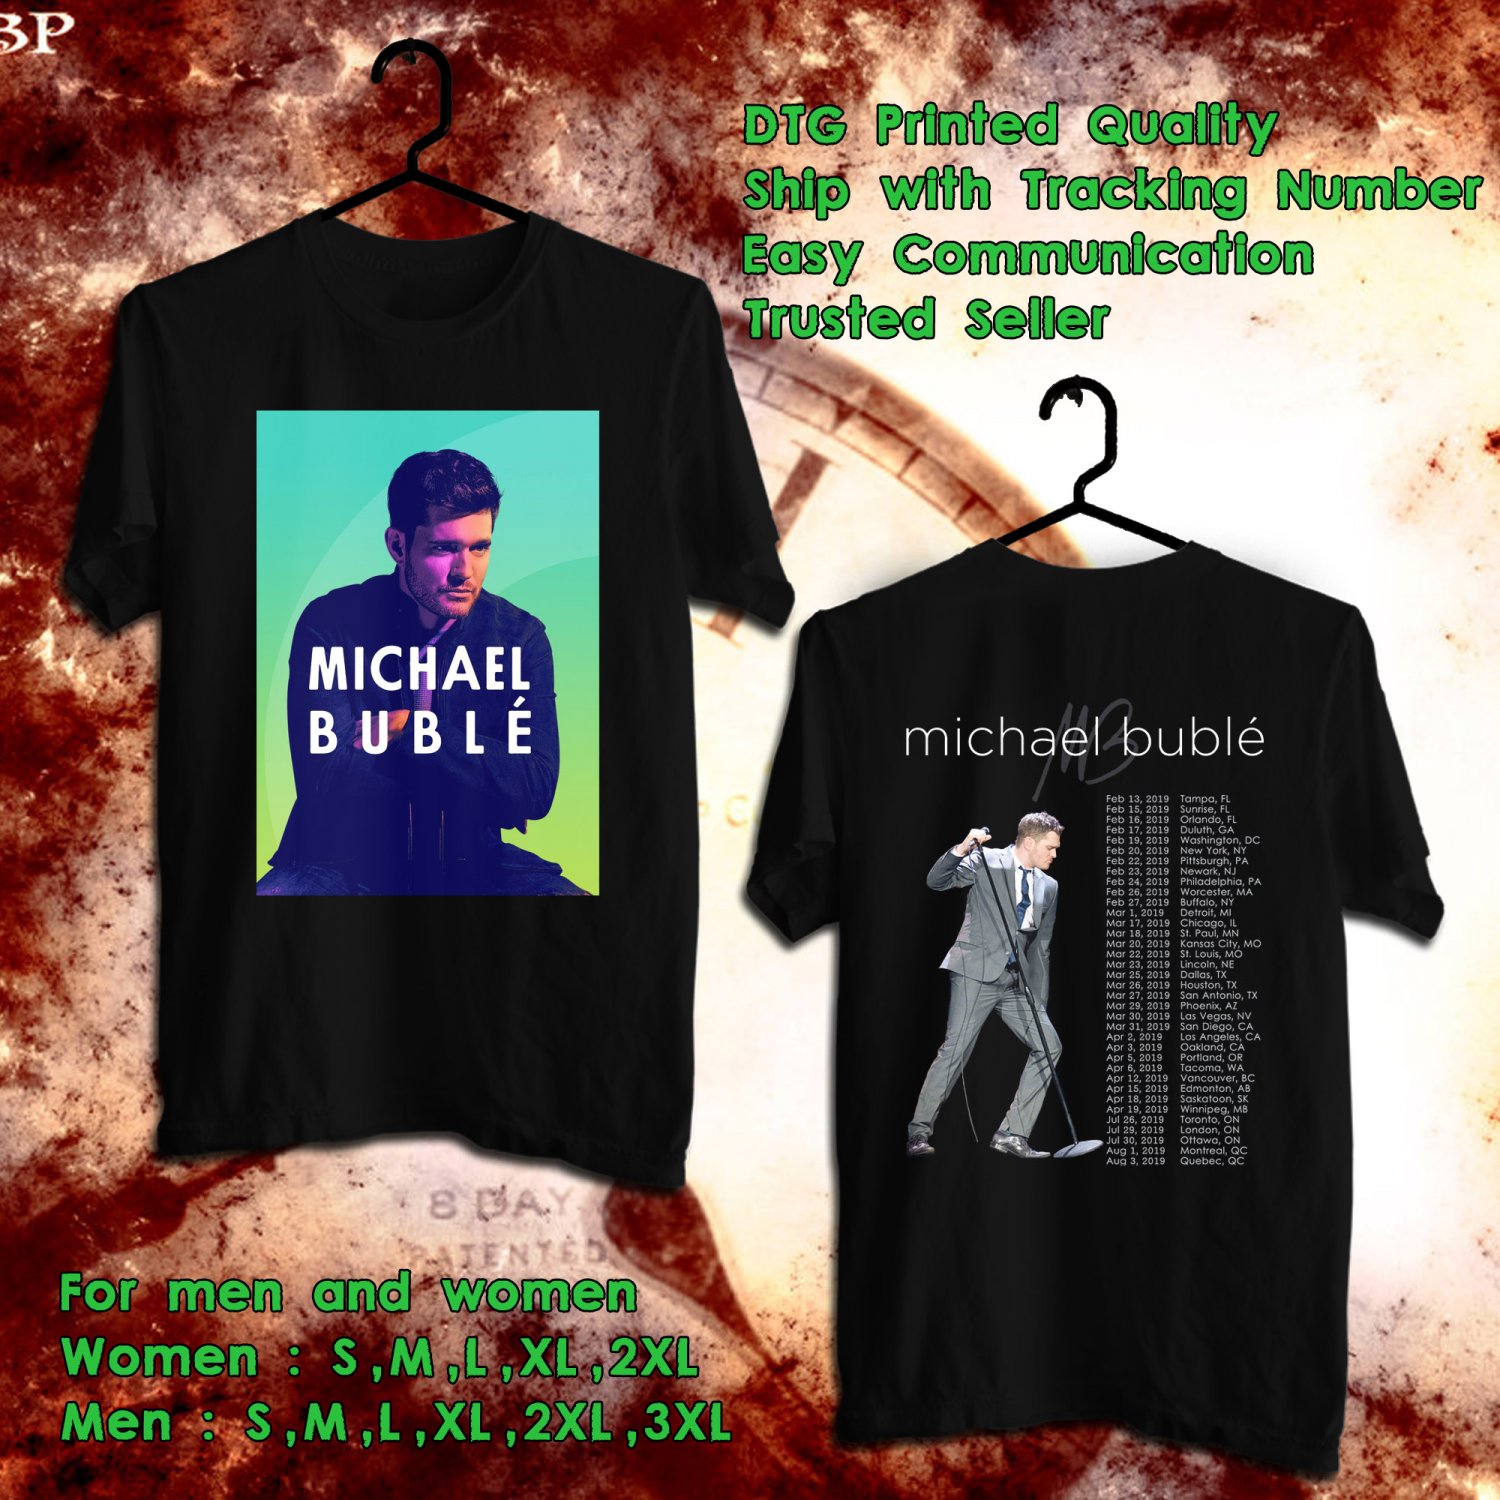 michael buble t shirt 2019